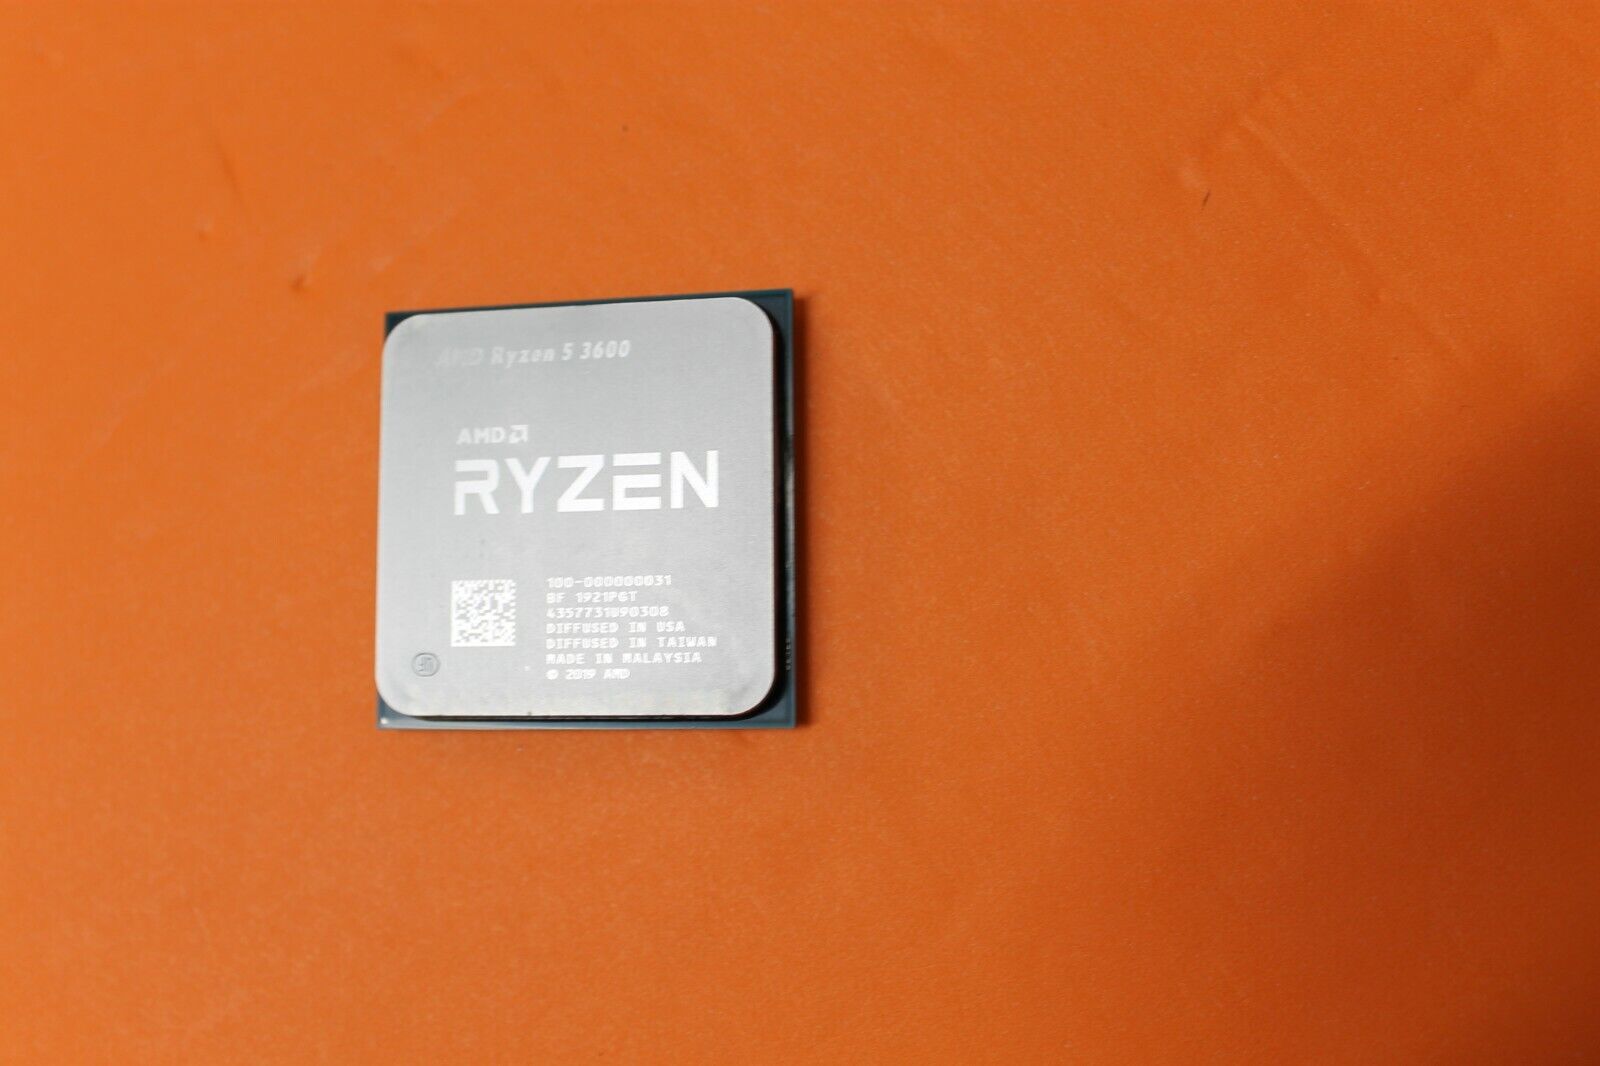 AMD Ryzen 5 3600 Processor (3.6 GHz, 6 Cores, Socket AM4) - 100 